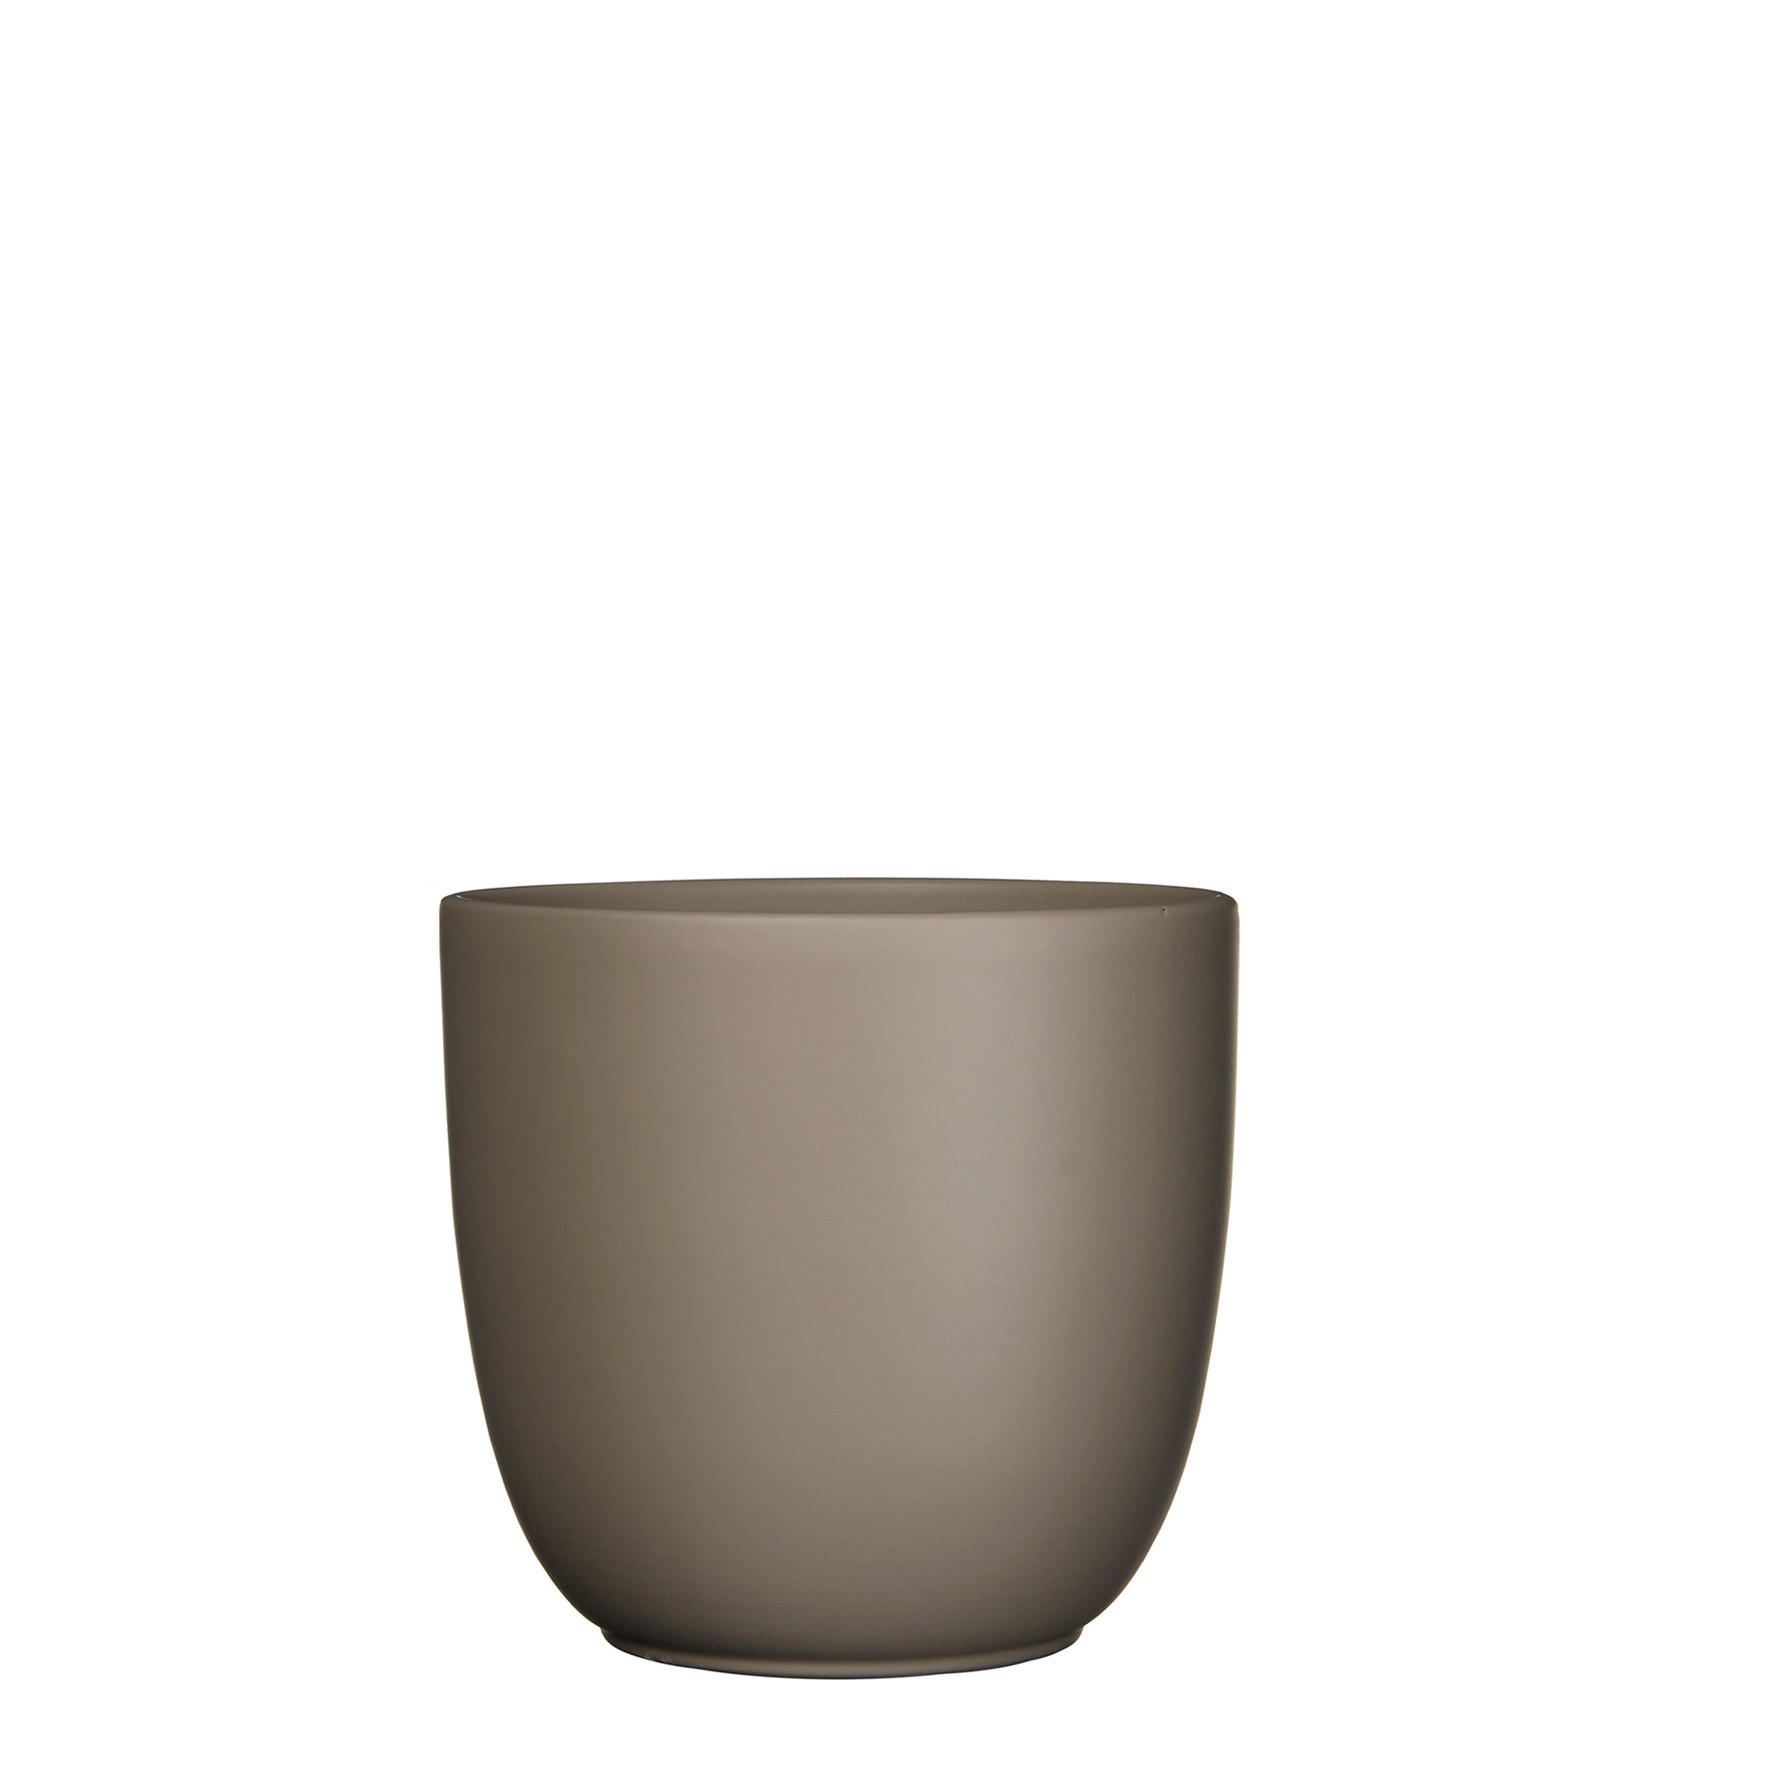 TEGLA ZA BILJKE  keramika  - taupe, Basics, keramika (22.5/20cm)